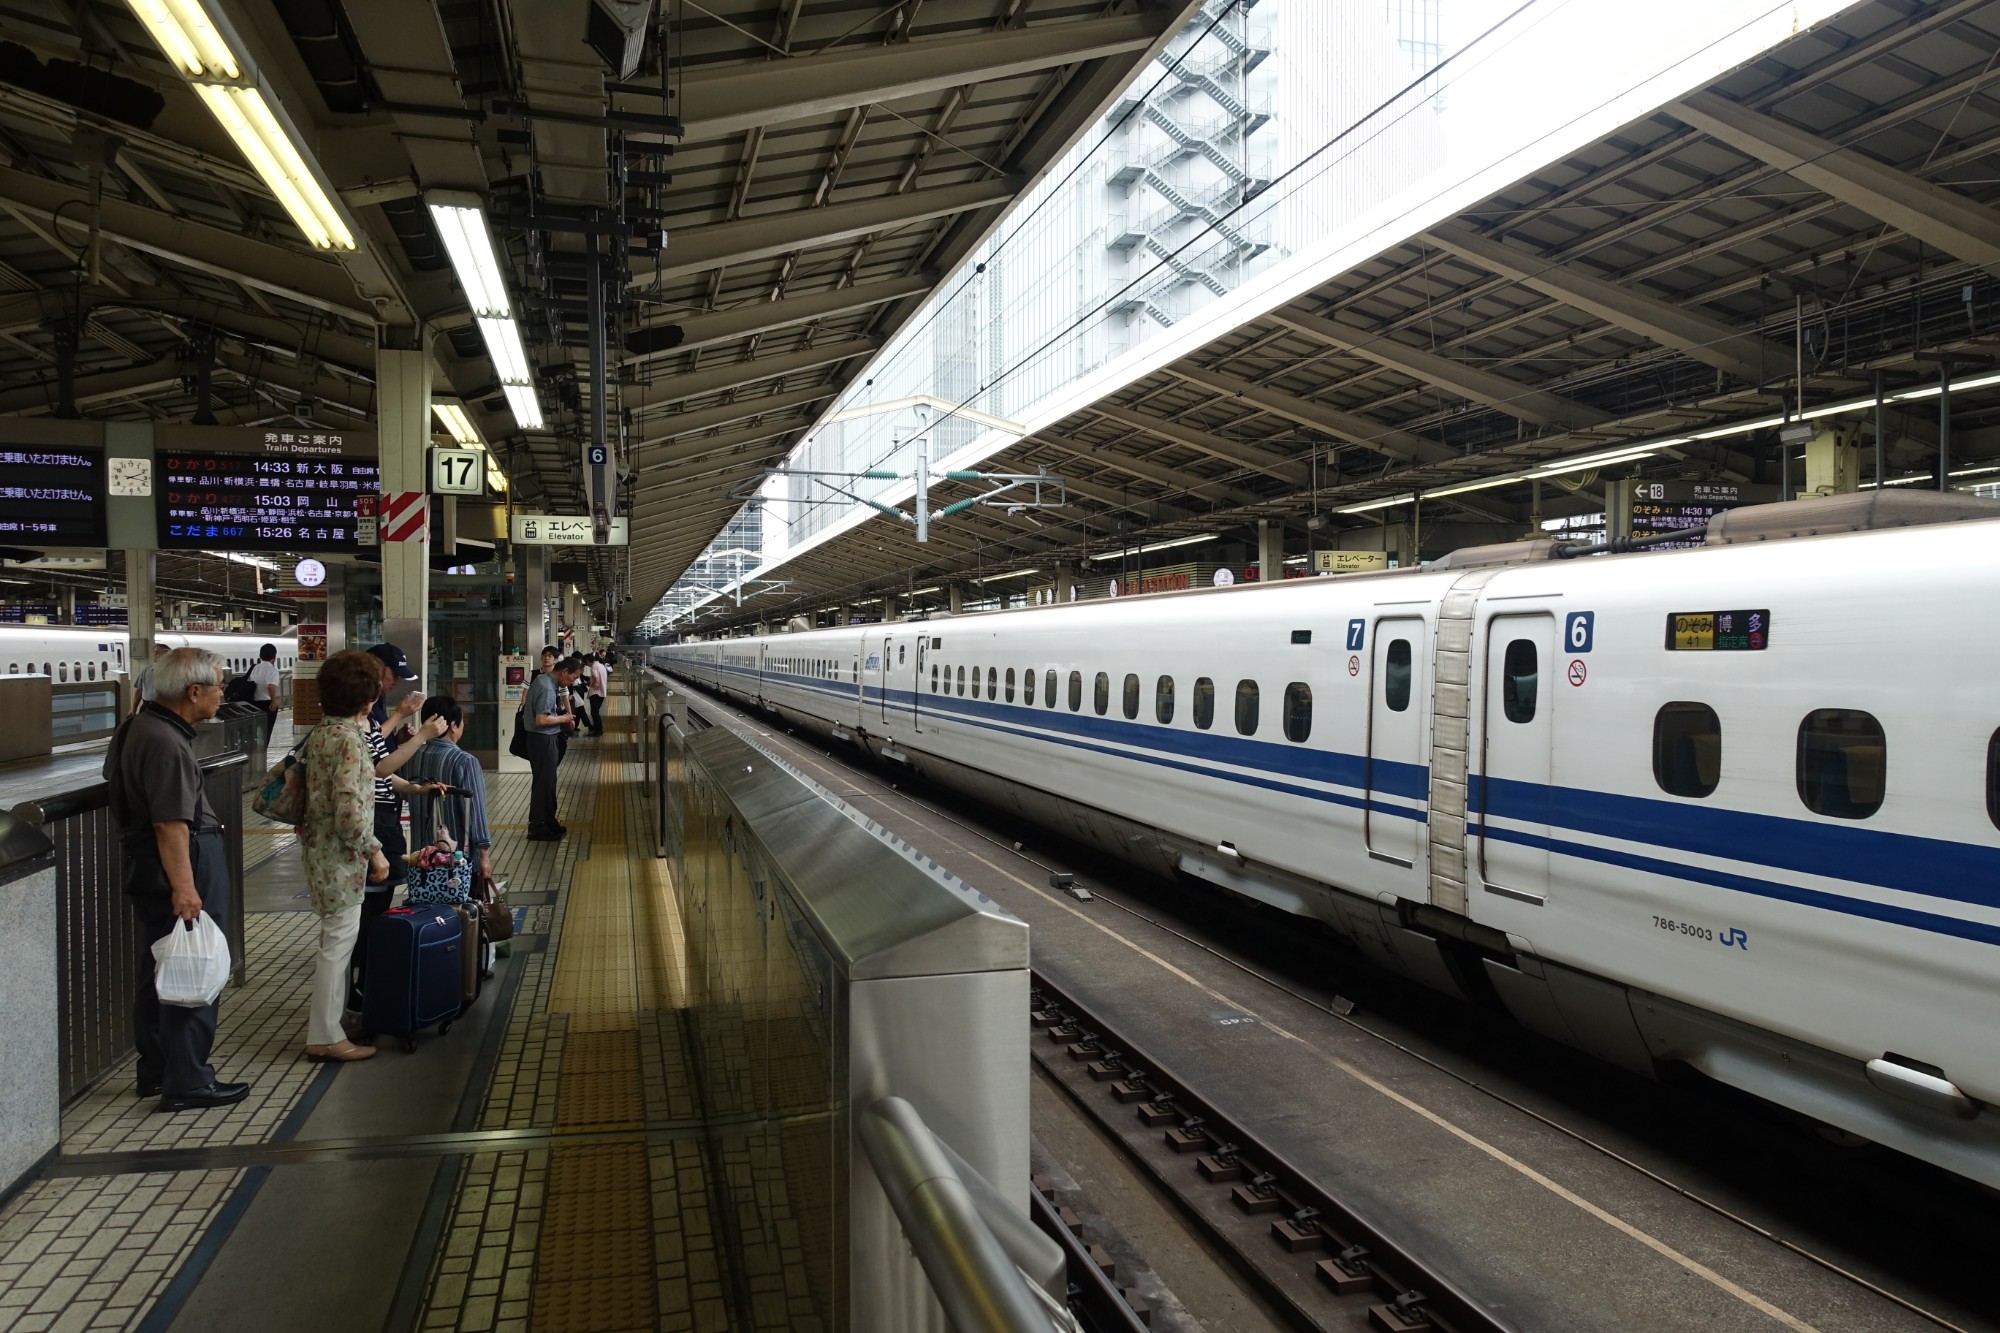 Back to Shin-Osaka: Hikari Shinkansen 